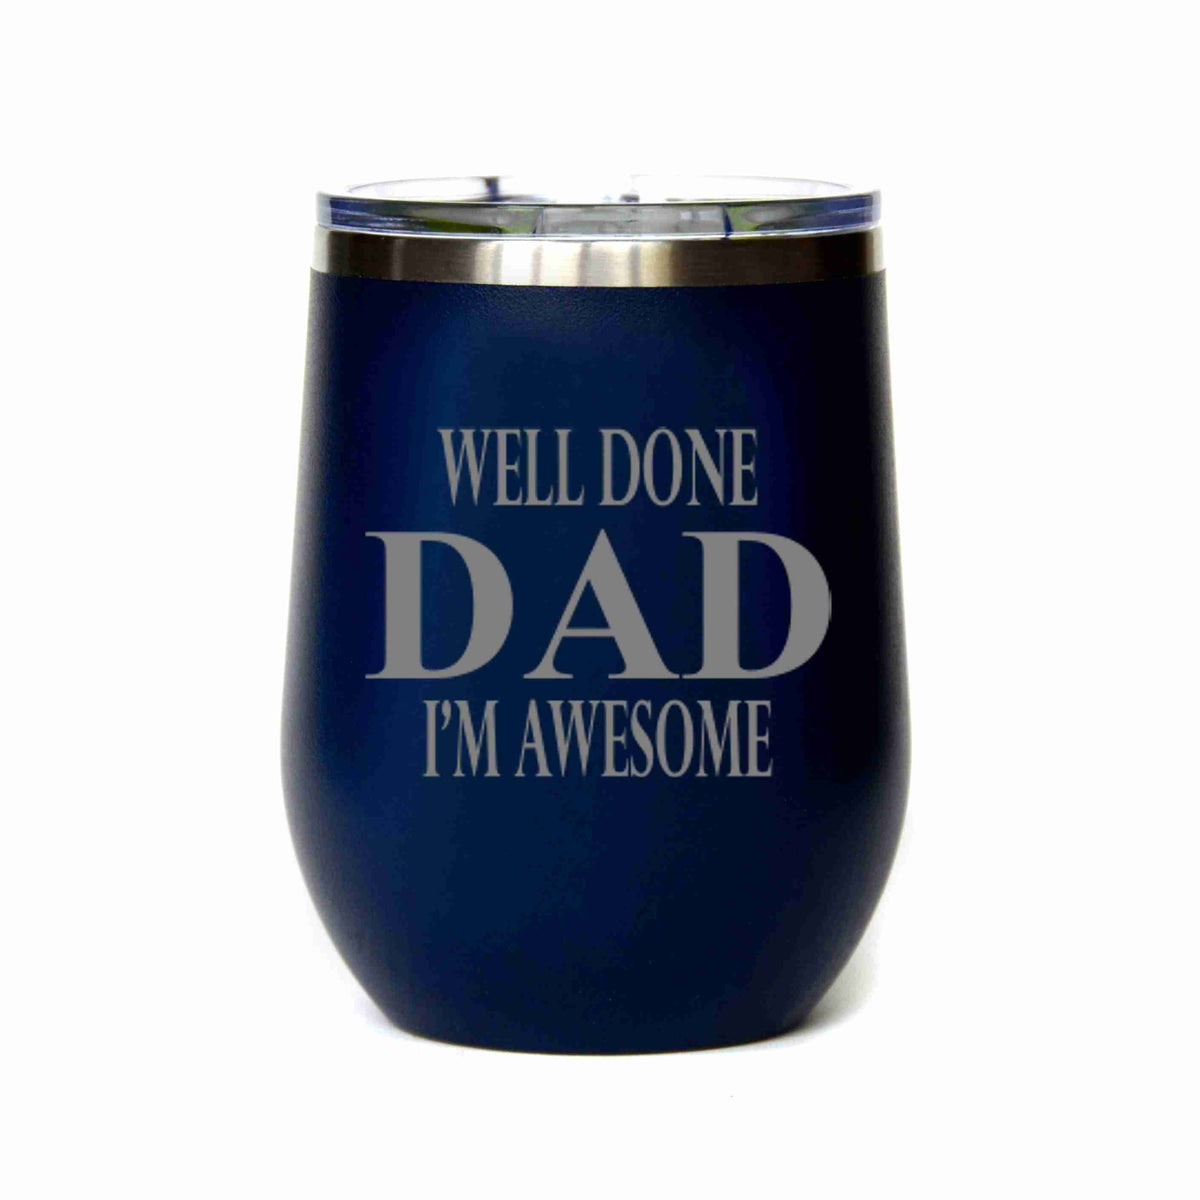 12 Oz  or Well Done Dad I'm Awesome Wine Mug